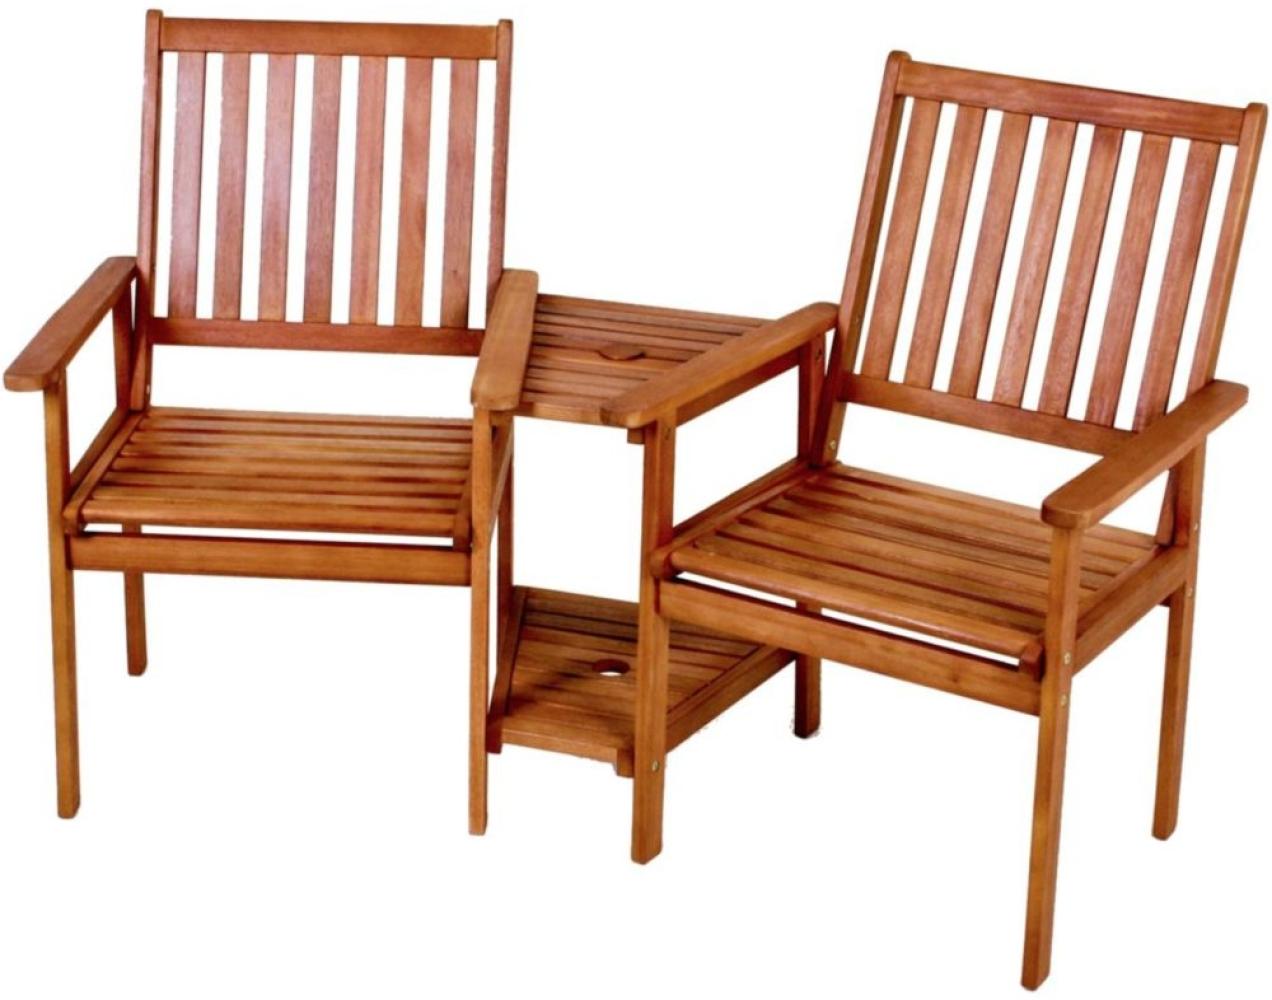 Doppelsessel Tisch Eukalyptus Holz Garten Sessel Stuhl Stühle Sitzgruppe Möbel Bild 1